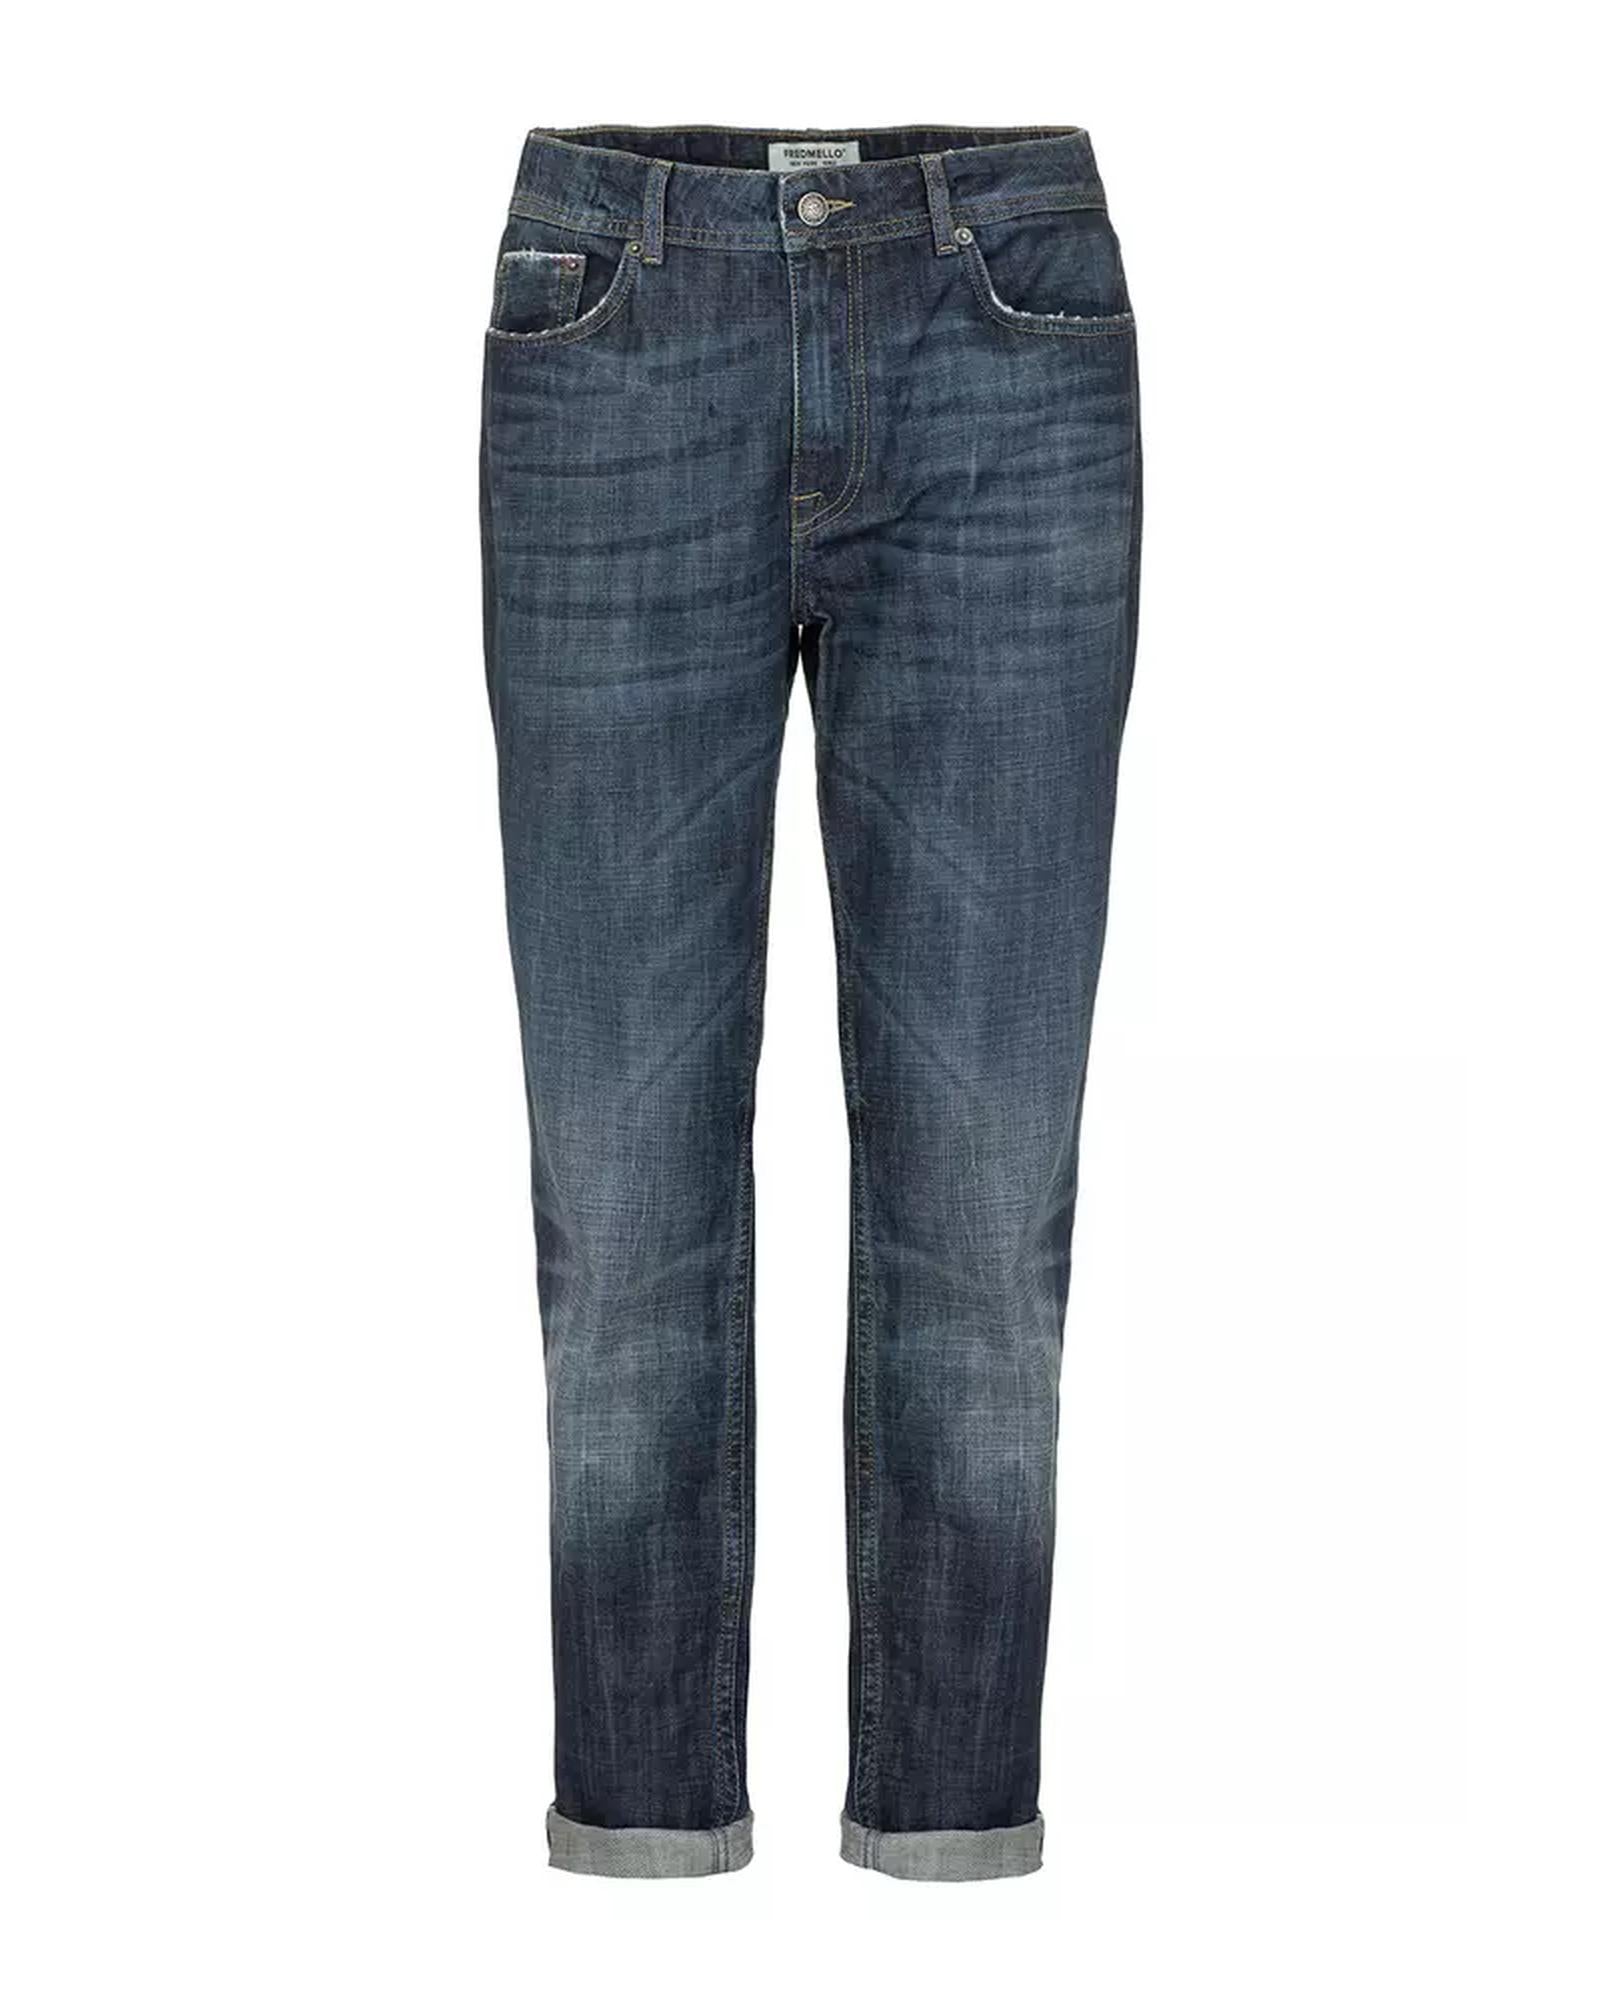 Five-Pocket Cotton Jeans with Zipper and Button Closure W30 US Men